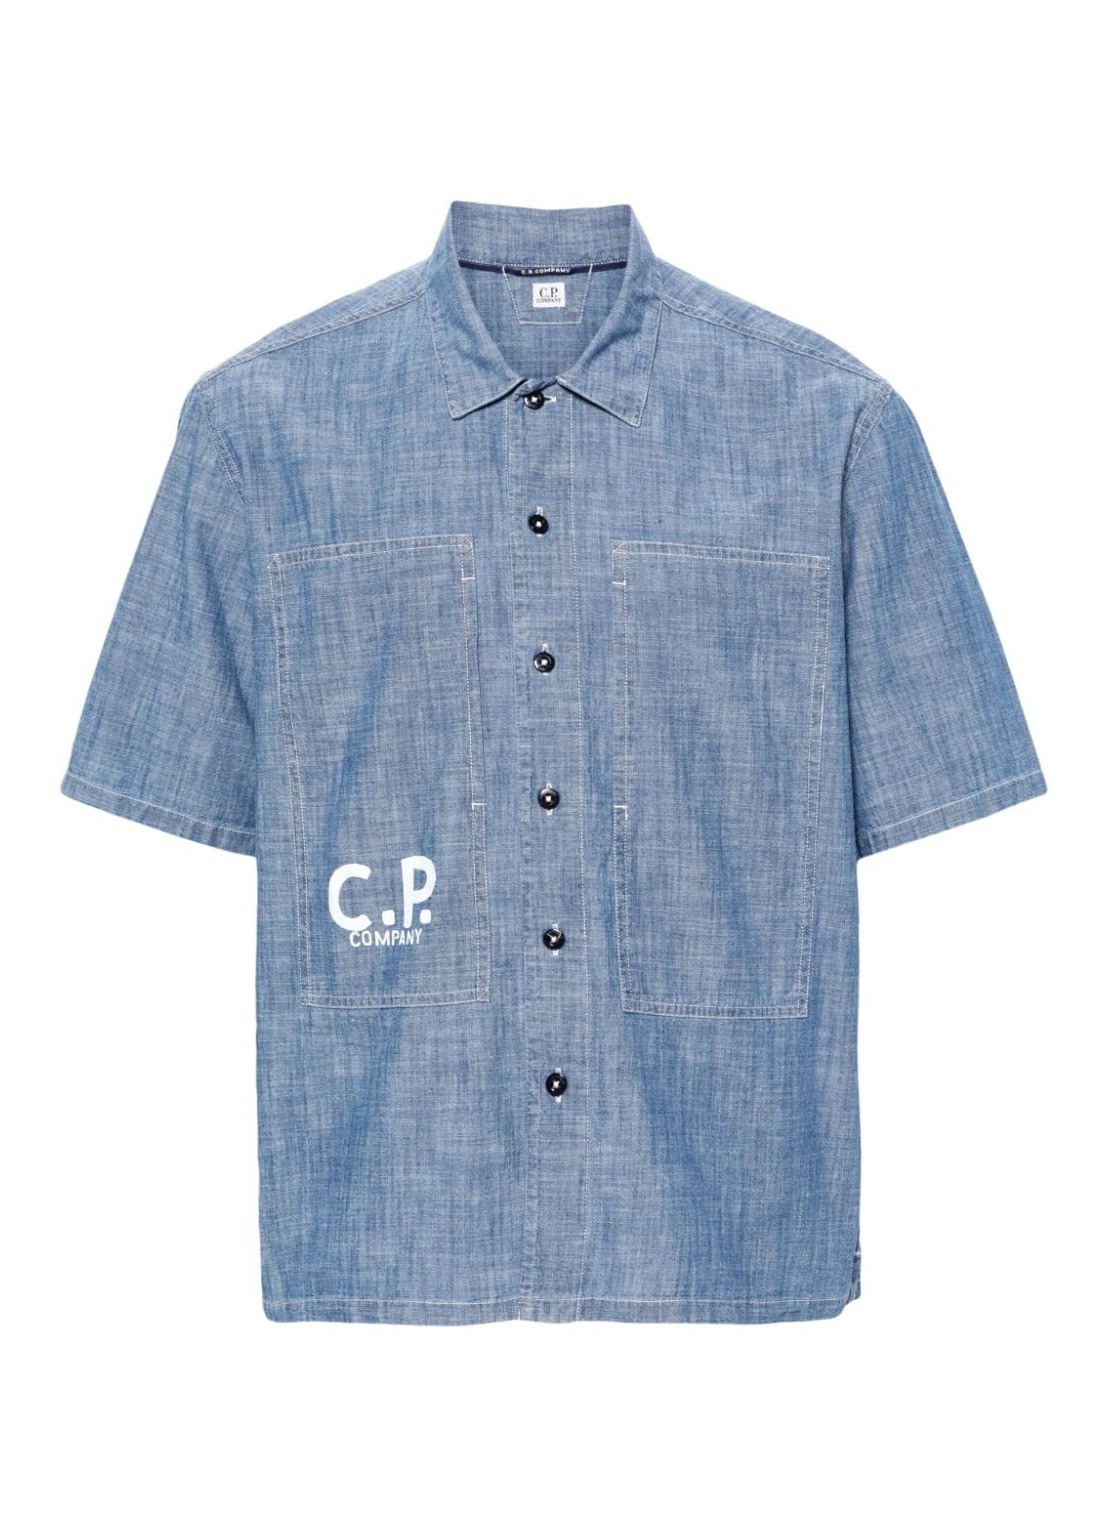 Camiseria c.p.company shirt manchambray short sleeved logo shirt - 16cmsh149a110065w d11 talla M
 